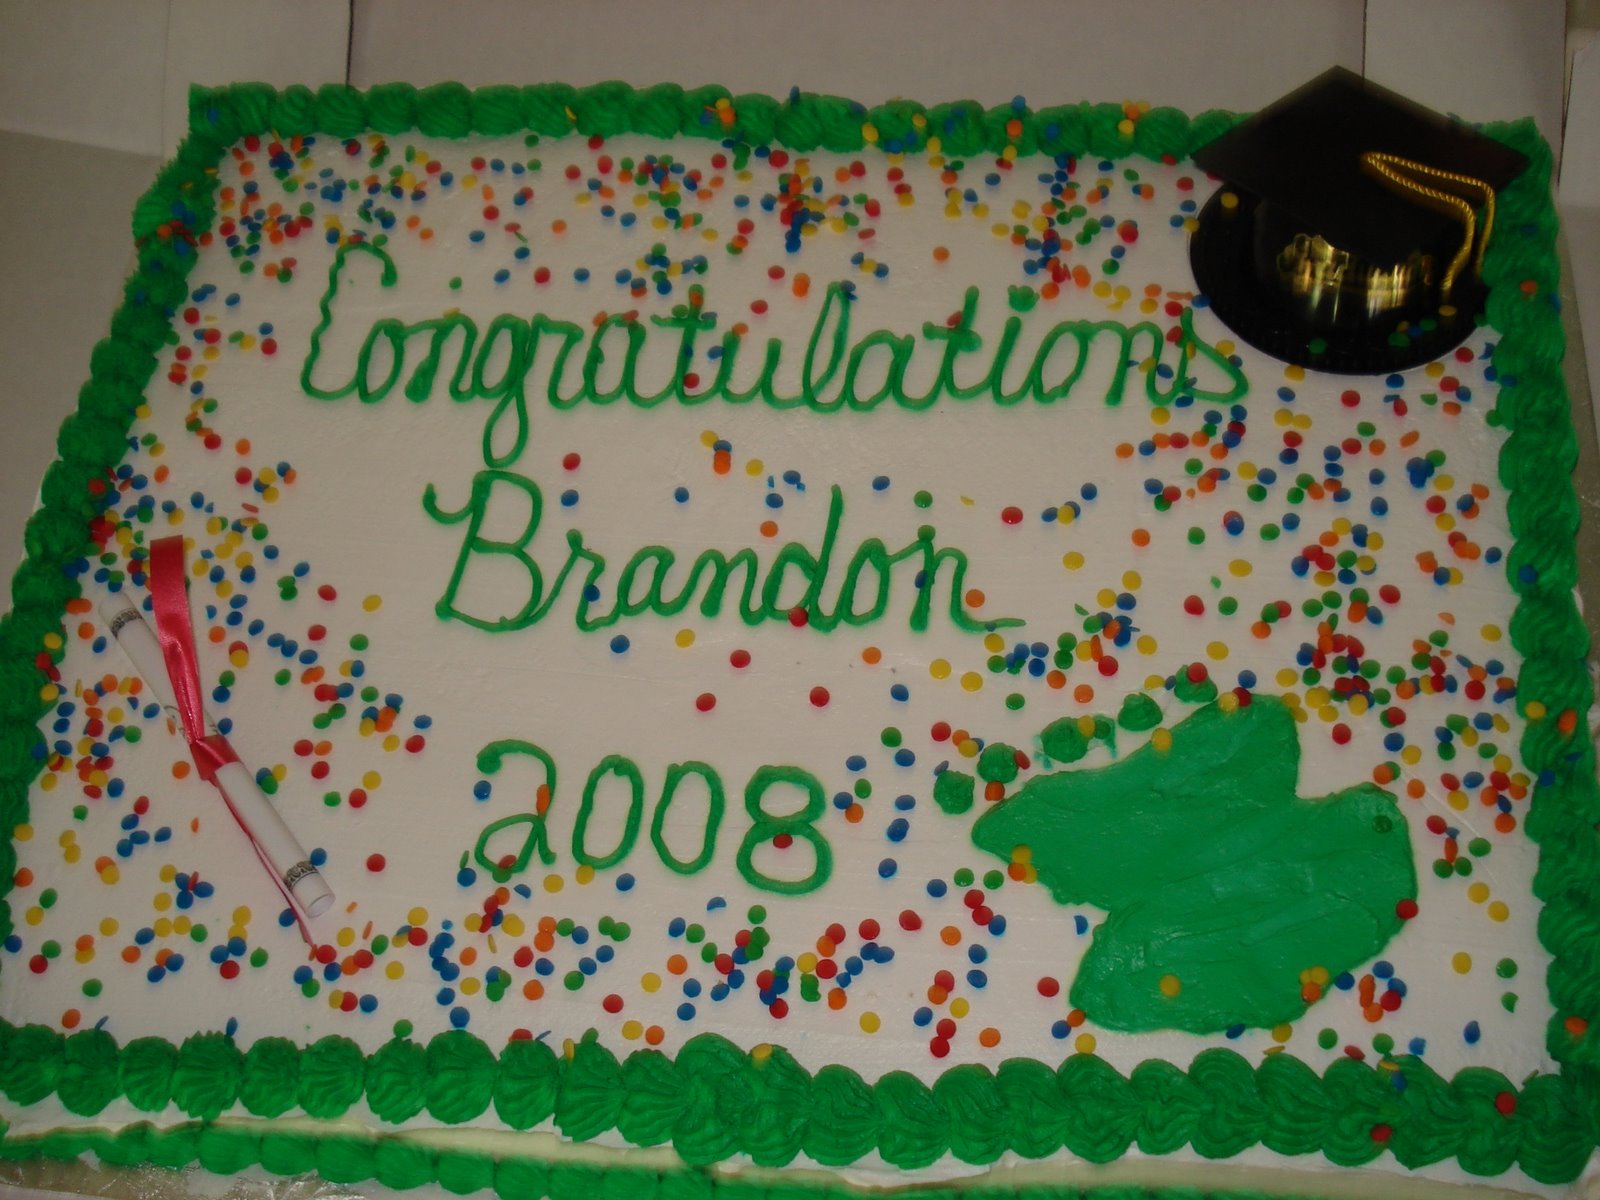 [Brandon+graduation+009.jpg]